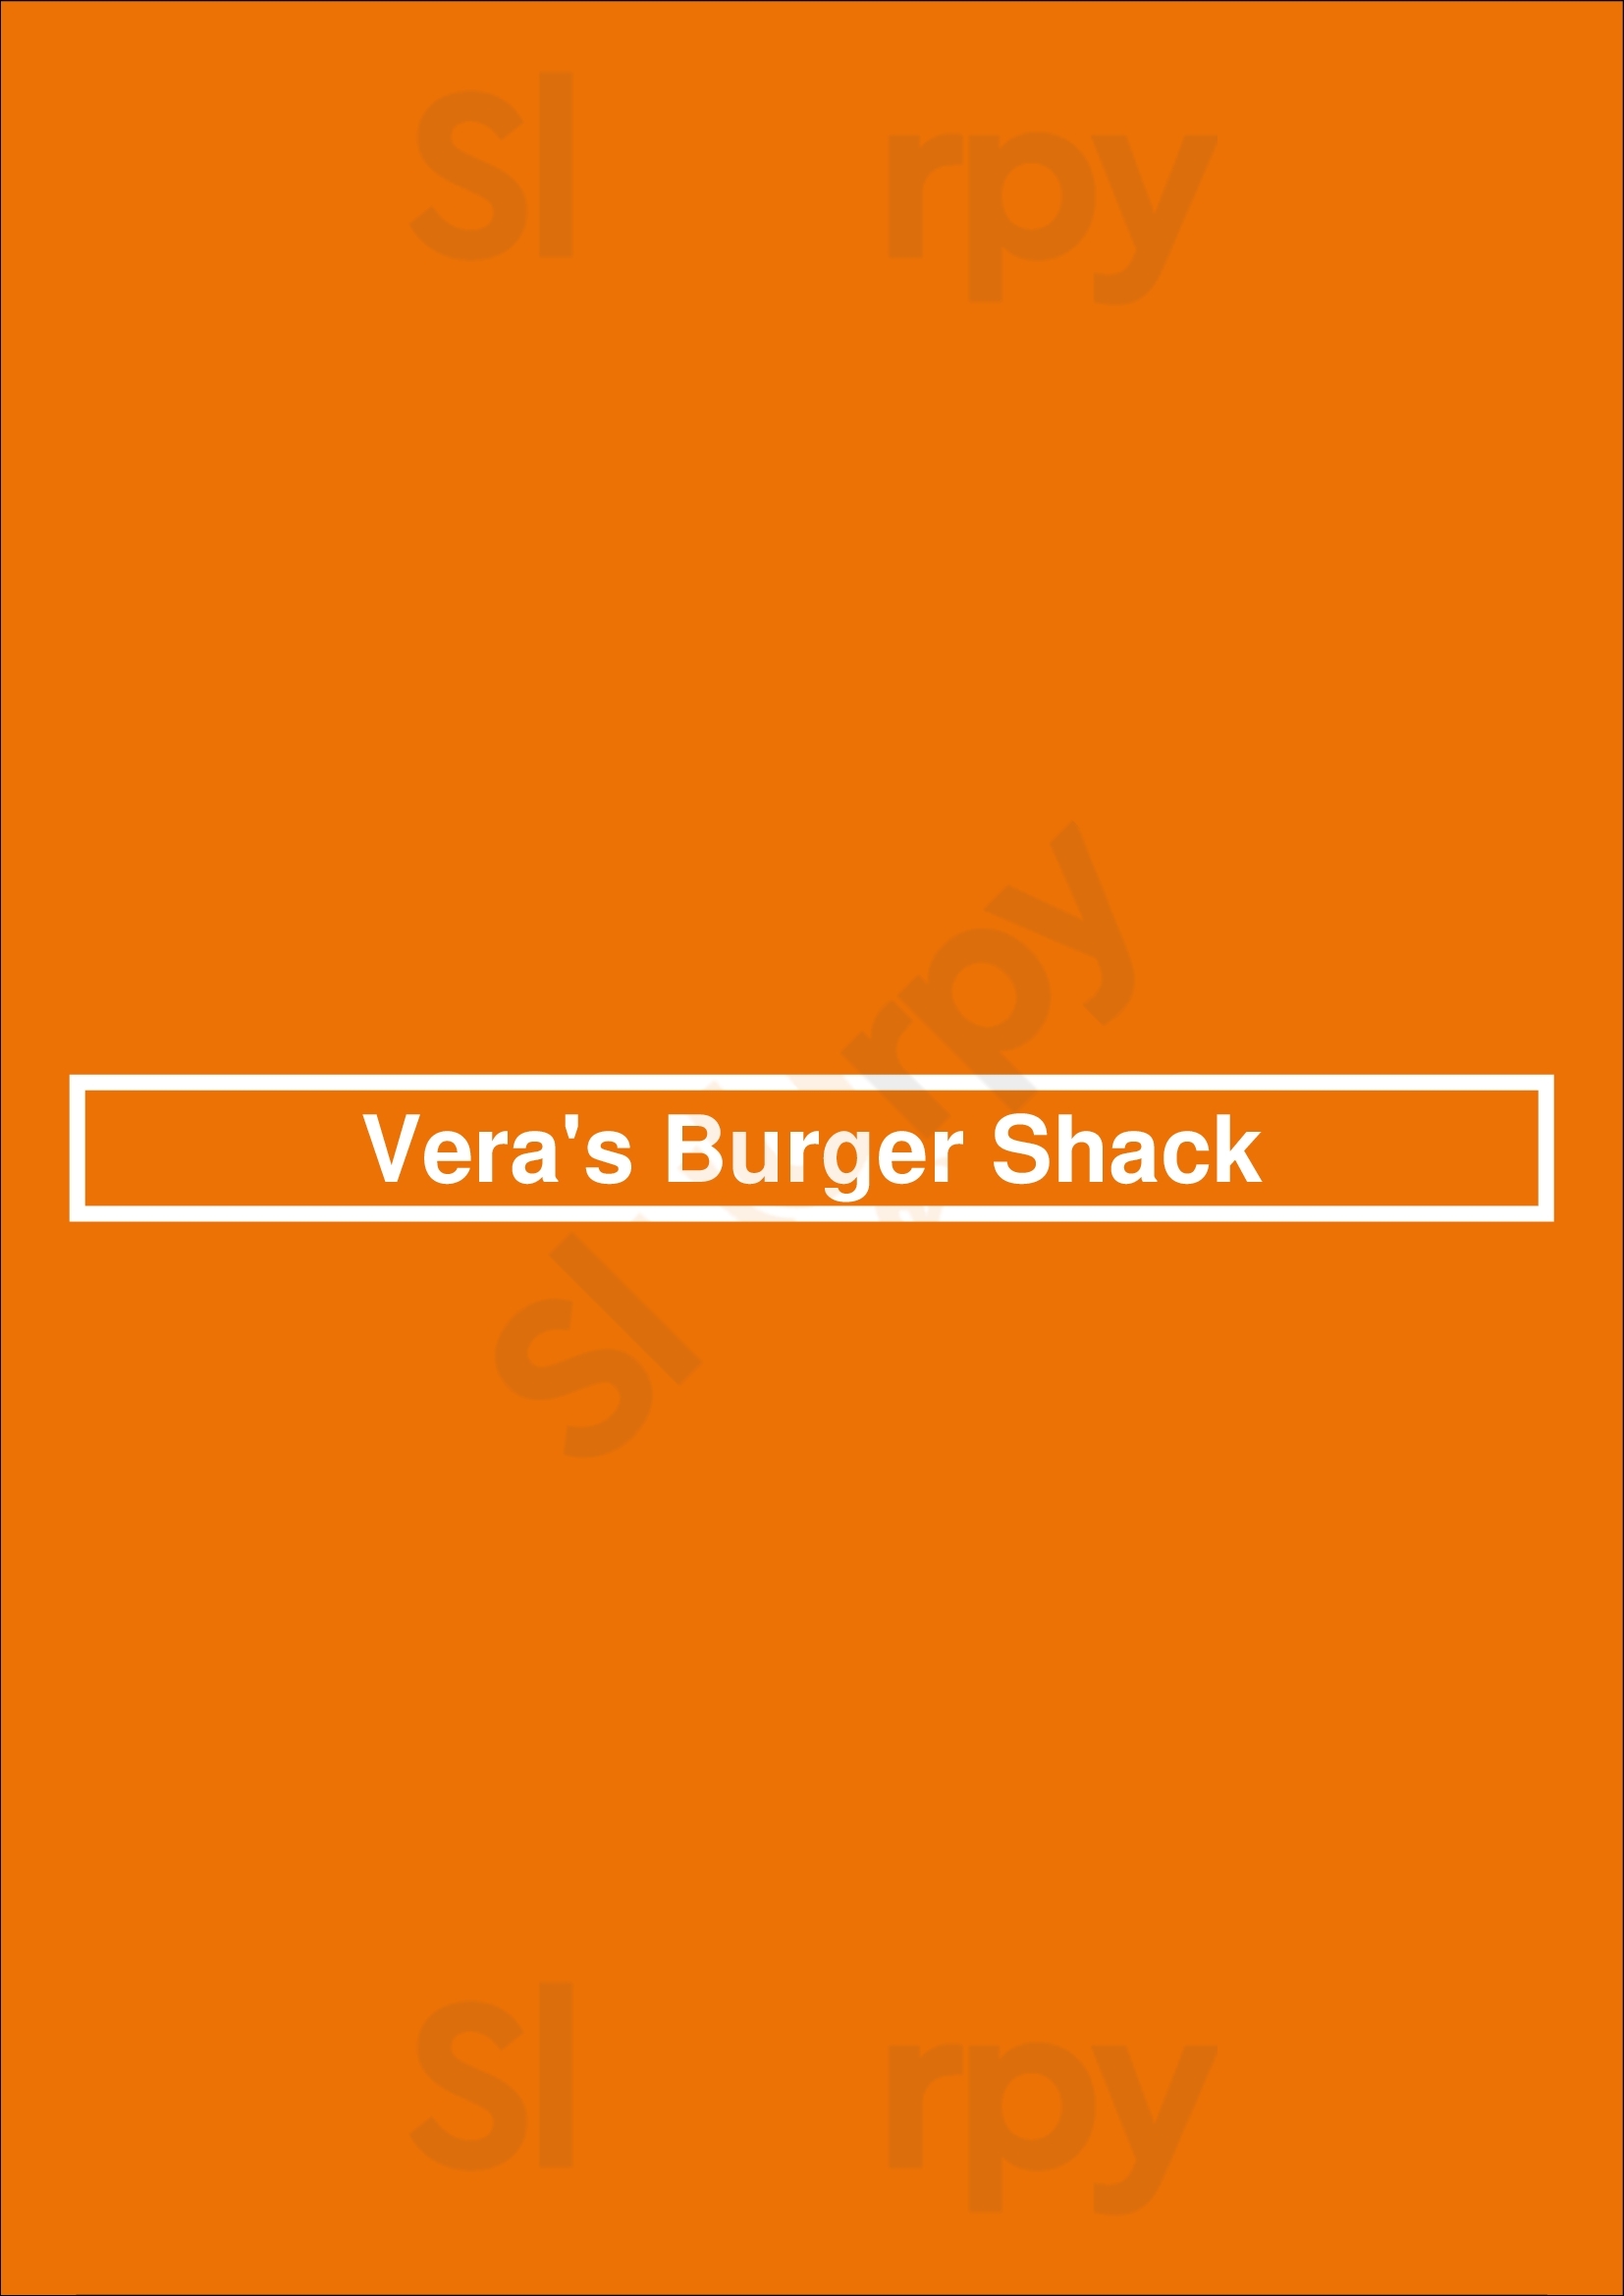 Vera's Burger Shack Vancouver Menu - 1